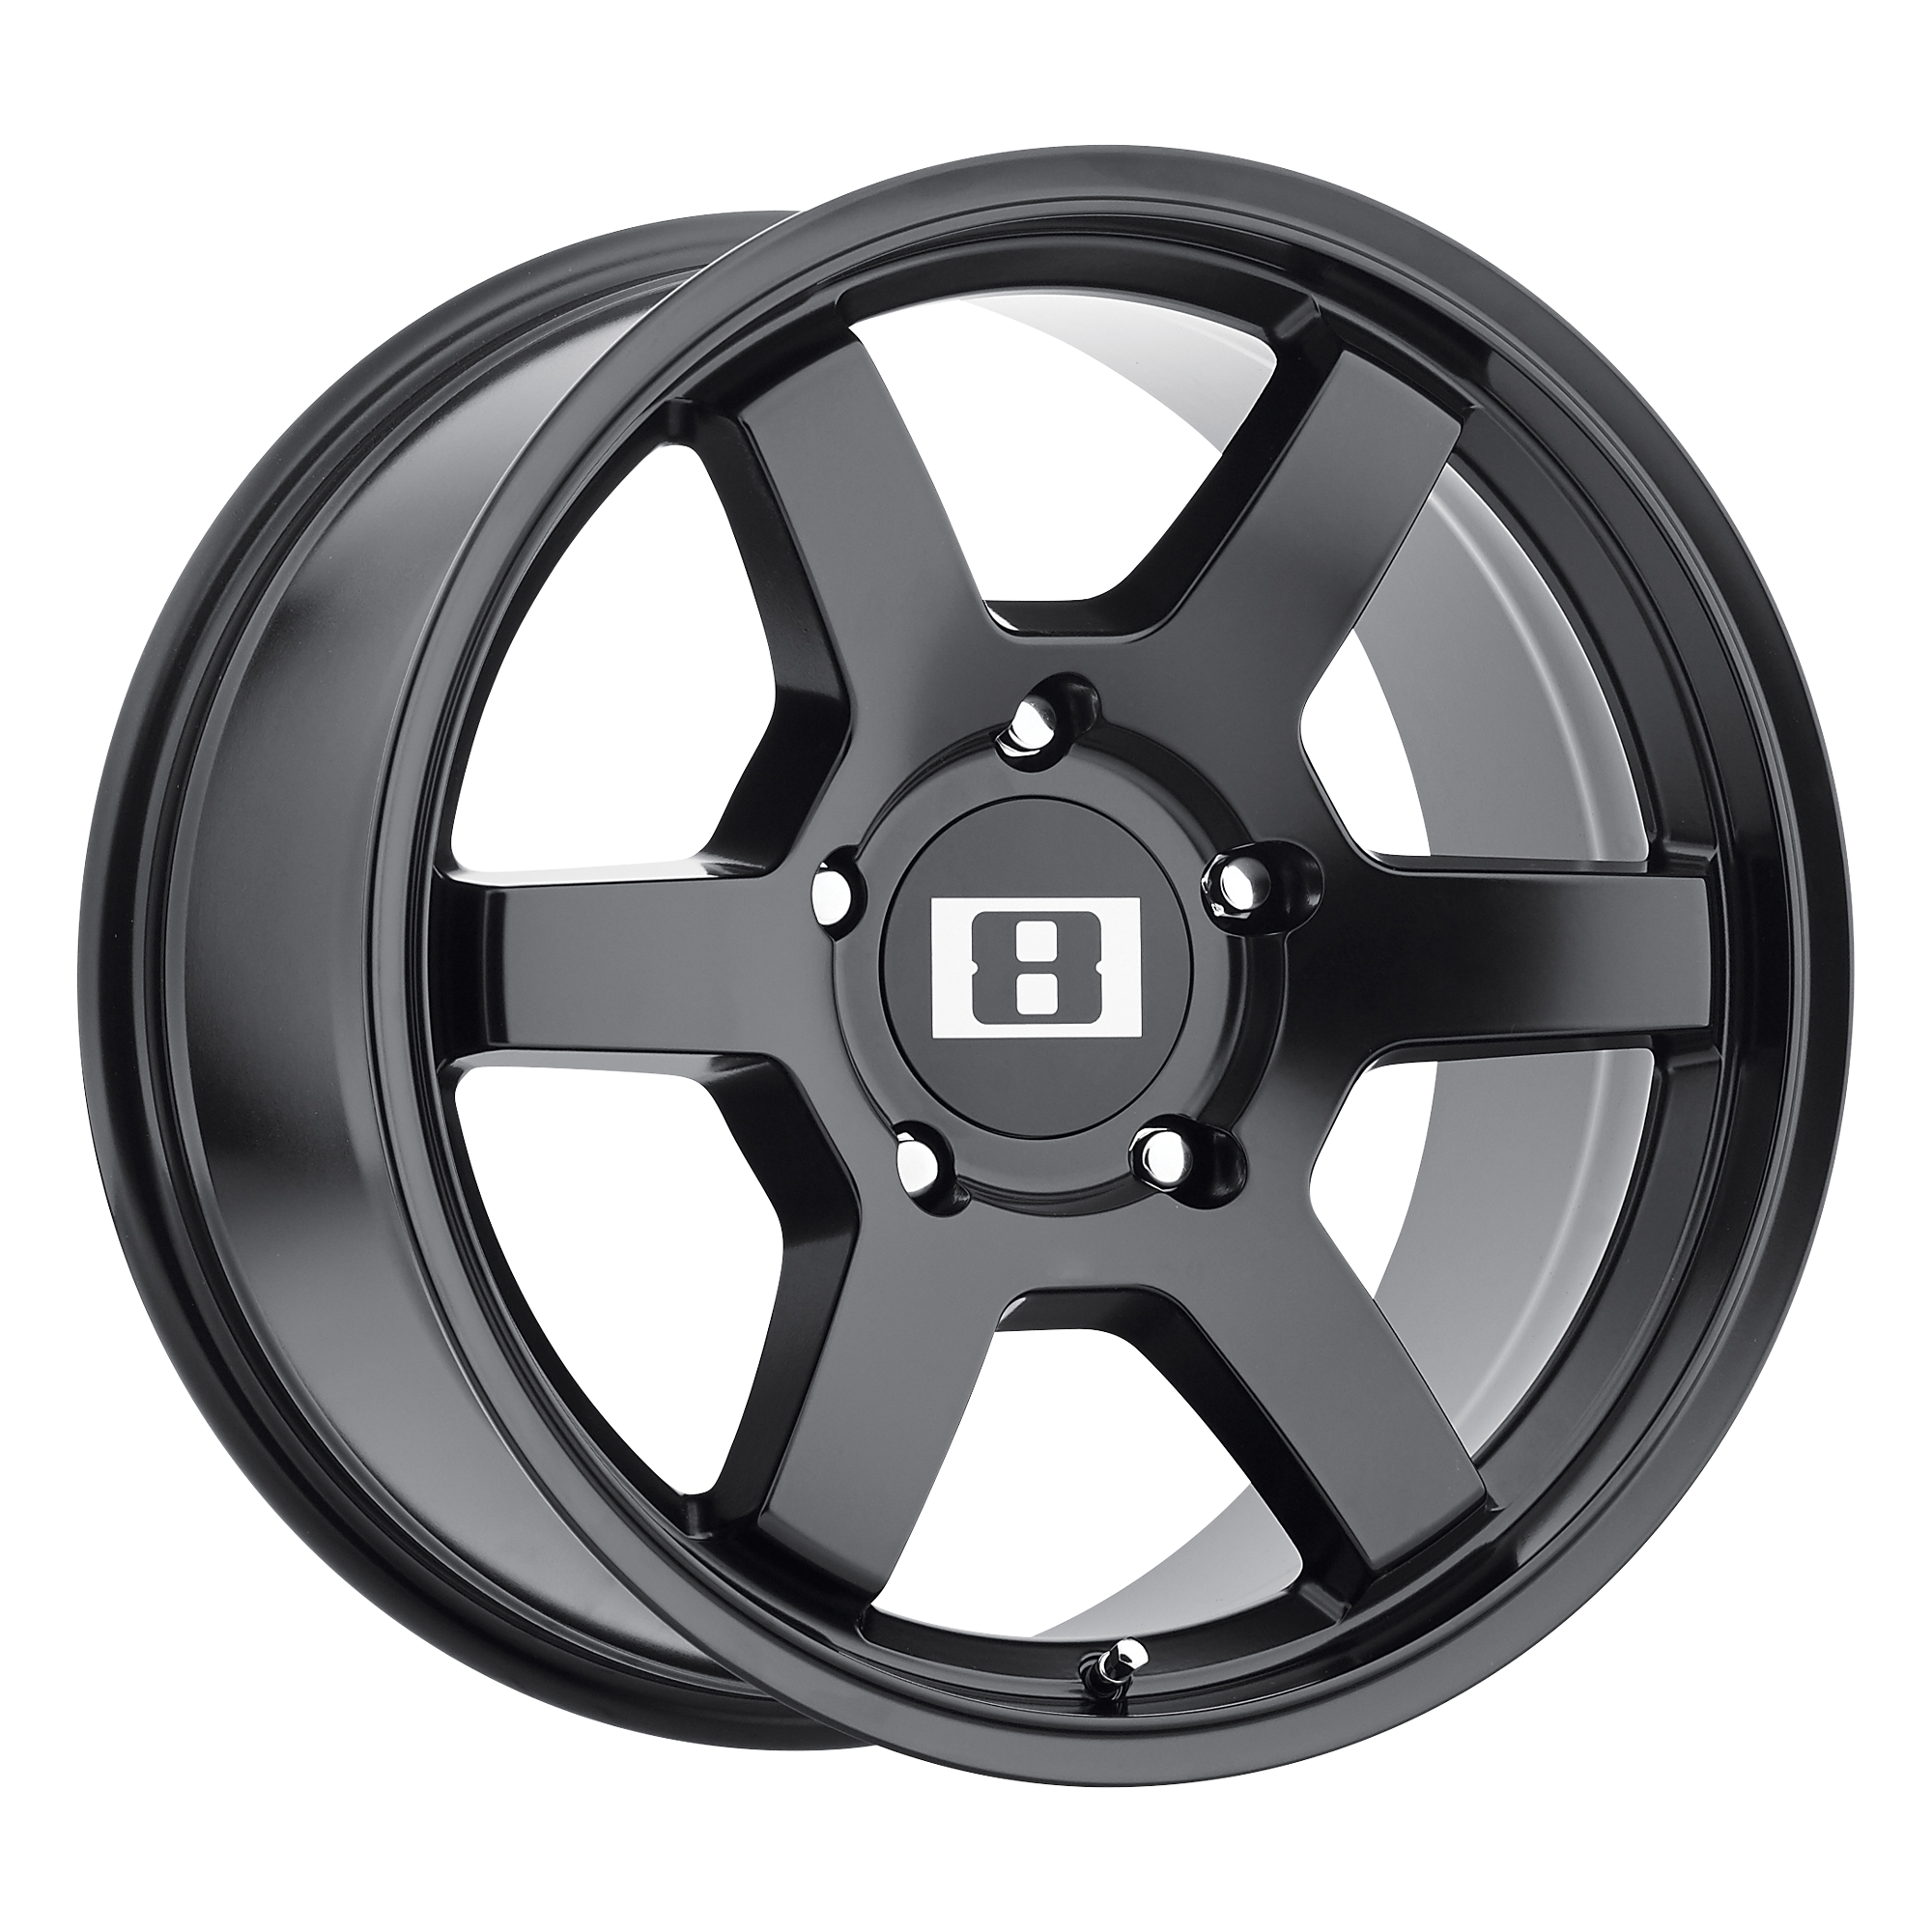 Level 8 MK6 Matte Black Cast Aluminum Wheel